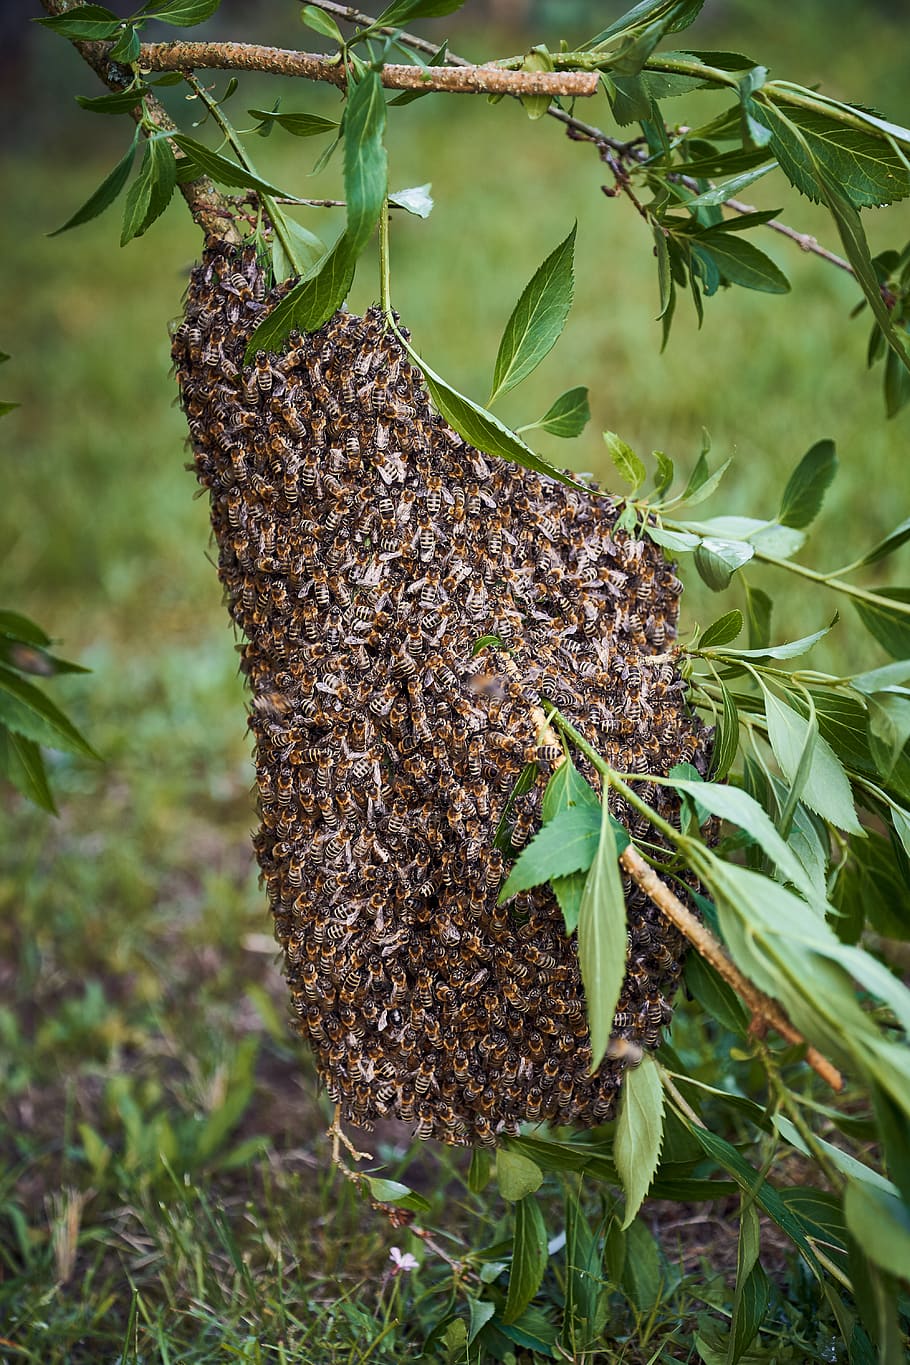 lebah, sarang lebah, serangga, lebah madu, pemeliharaan lebah, madu, alam, taman, serangga penerbangan, melarikan diri